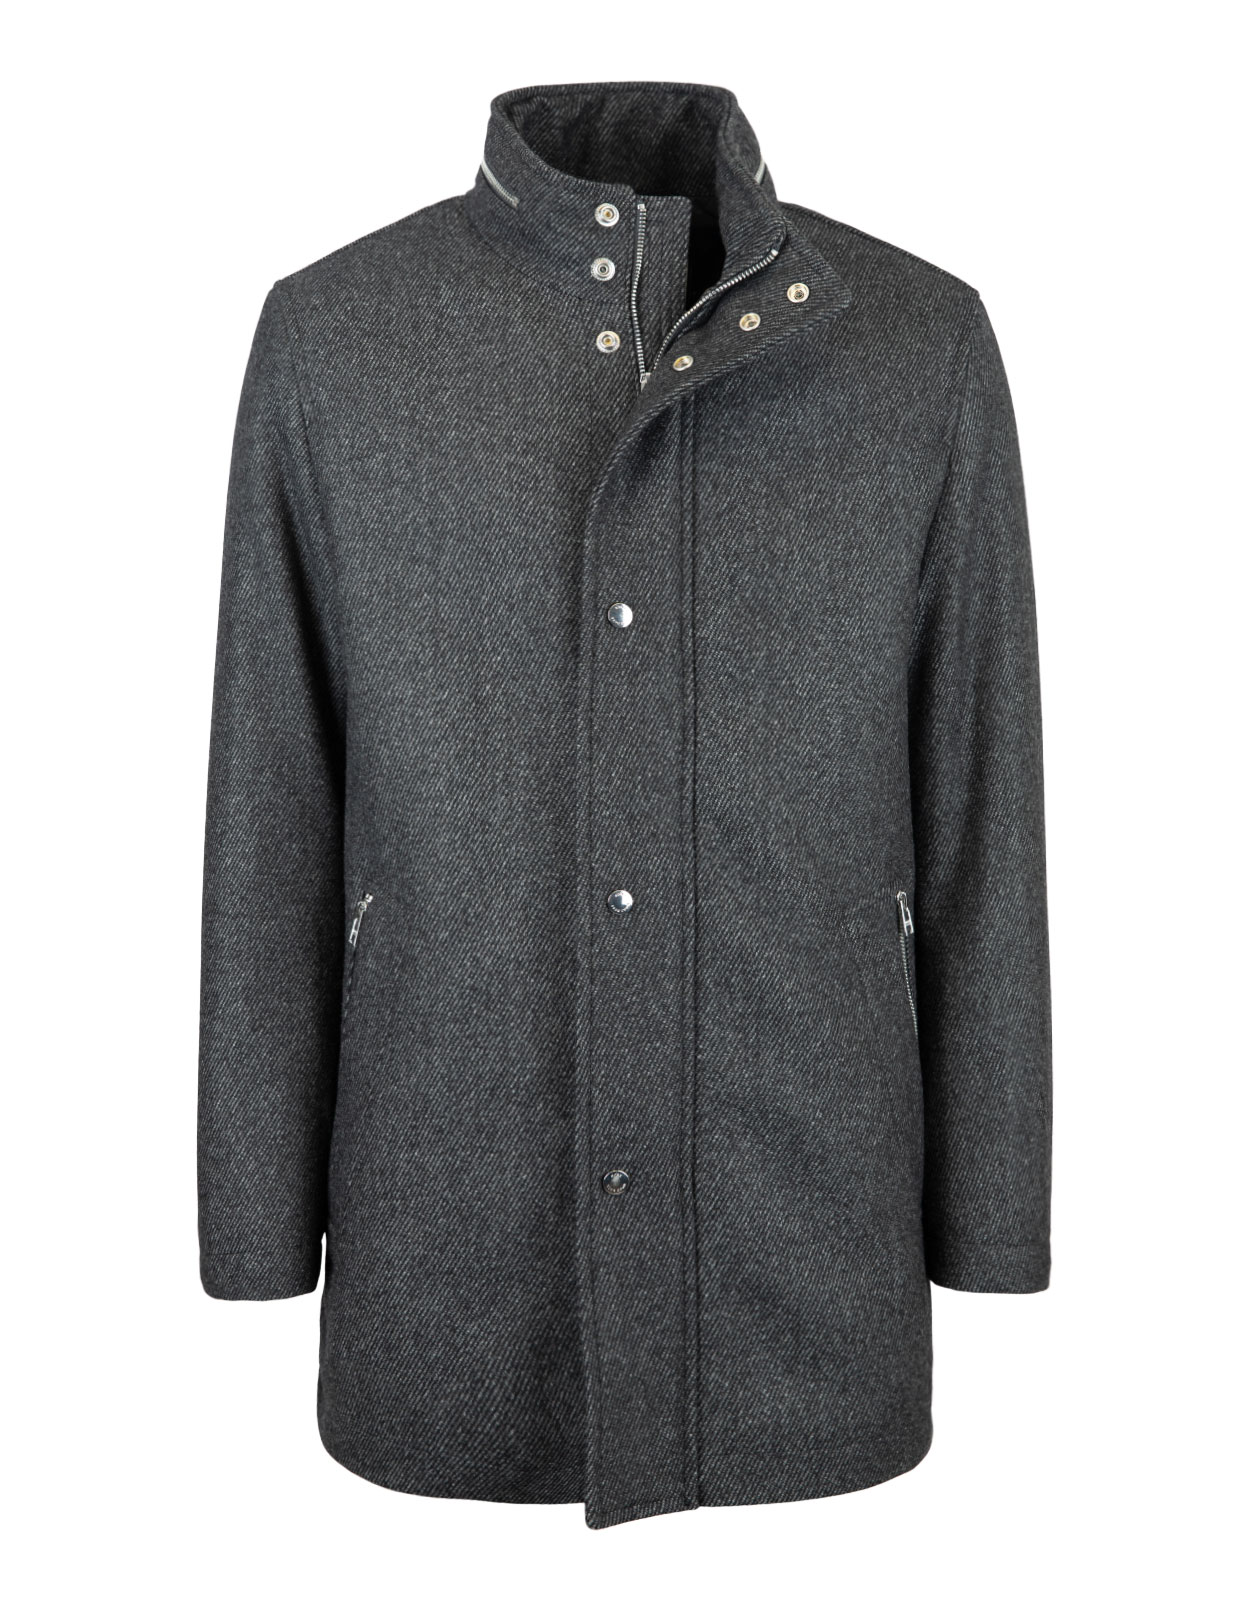 Camron4 Jacket Regular Fit Wool Blend Medium Grey